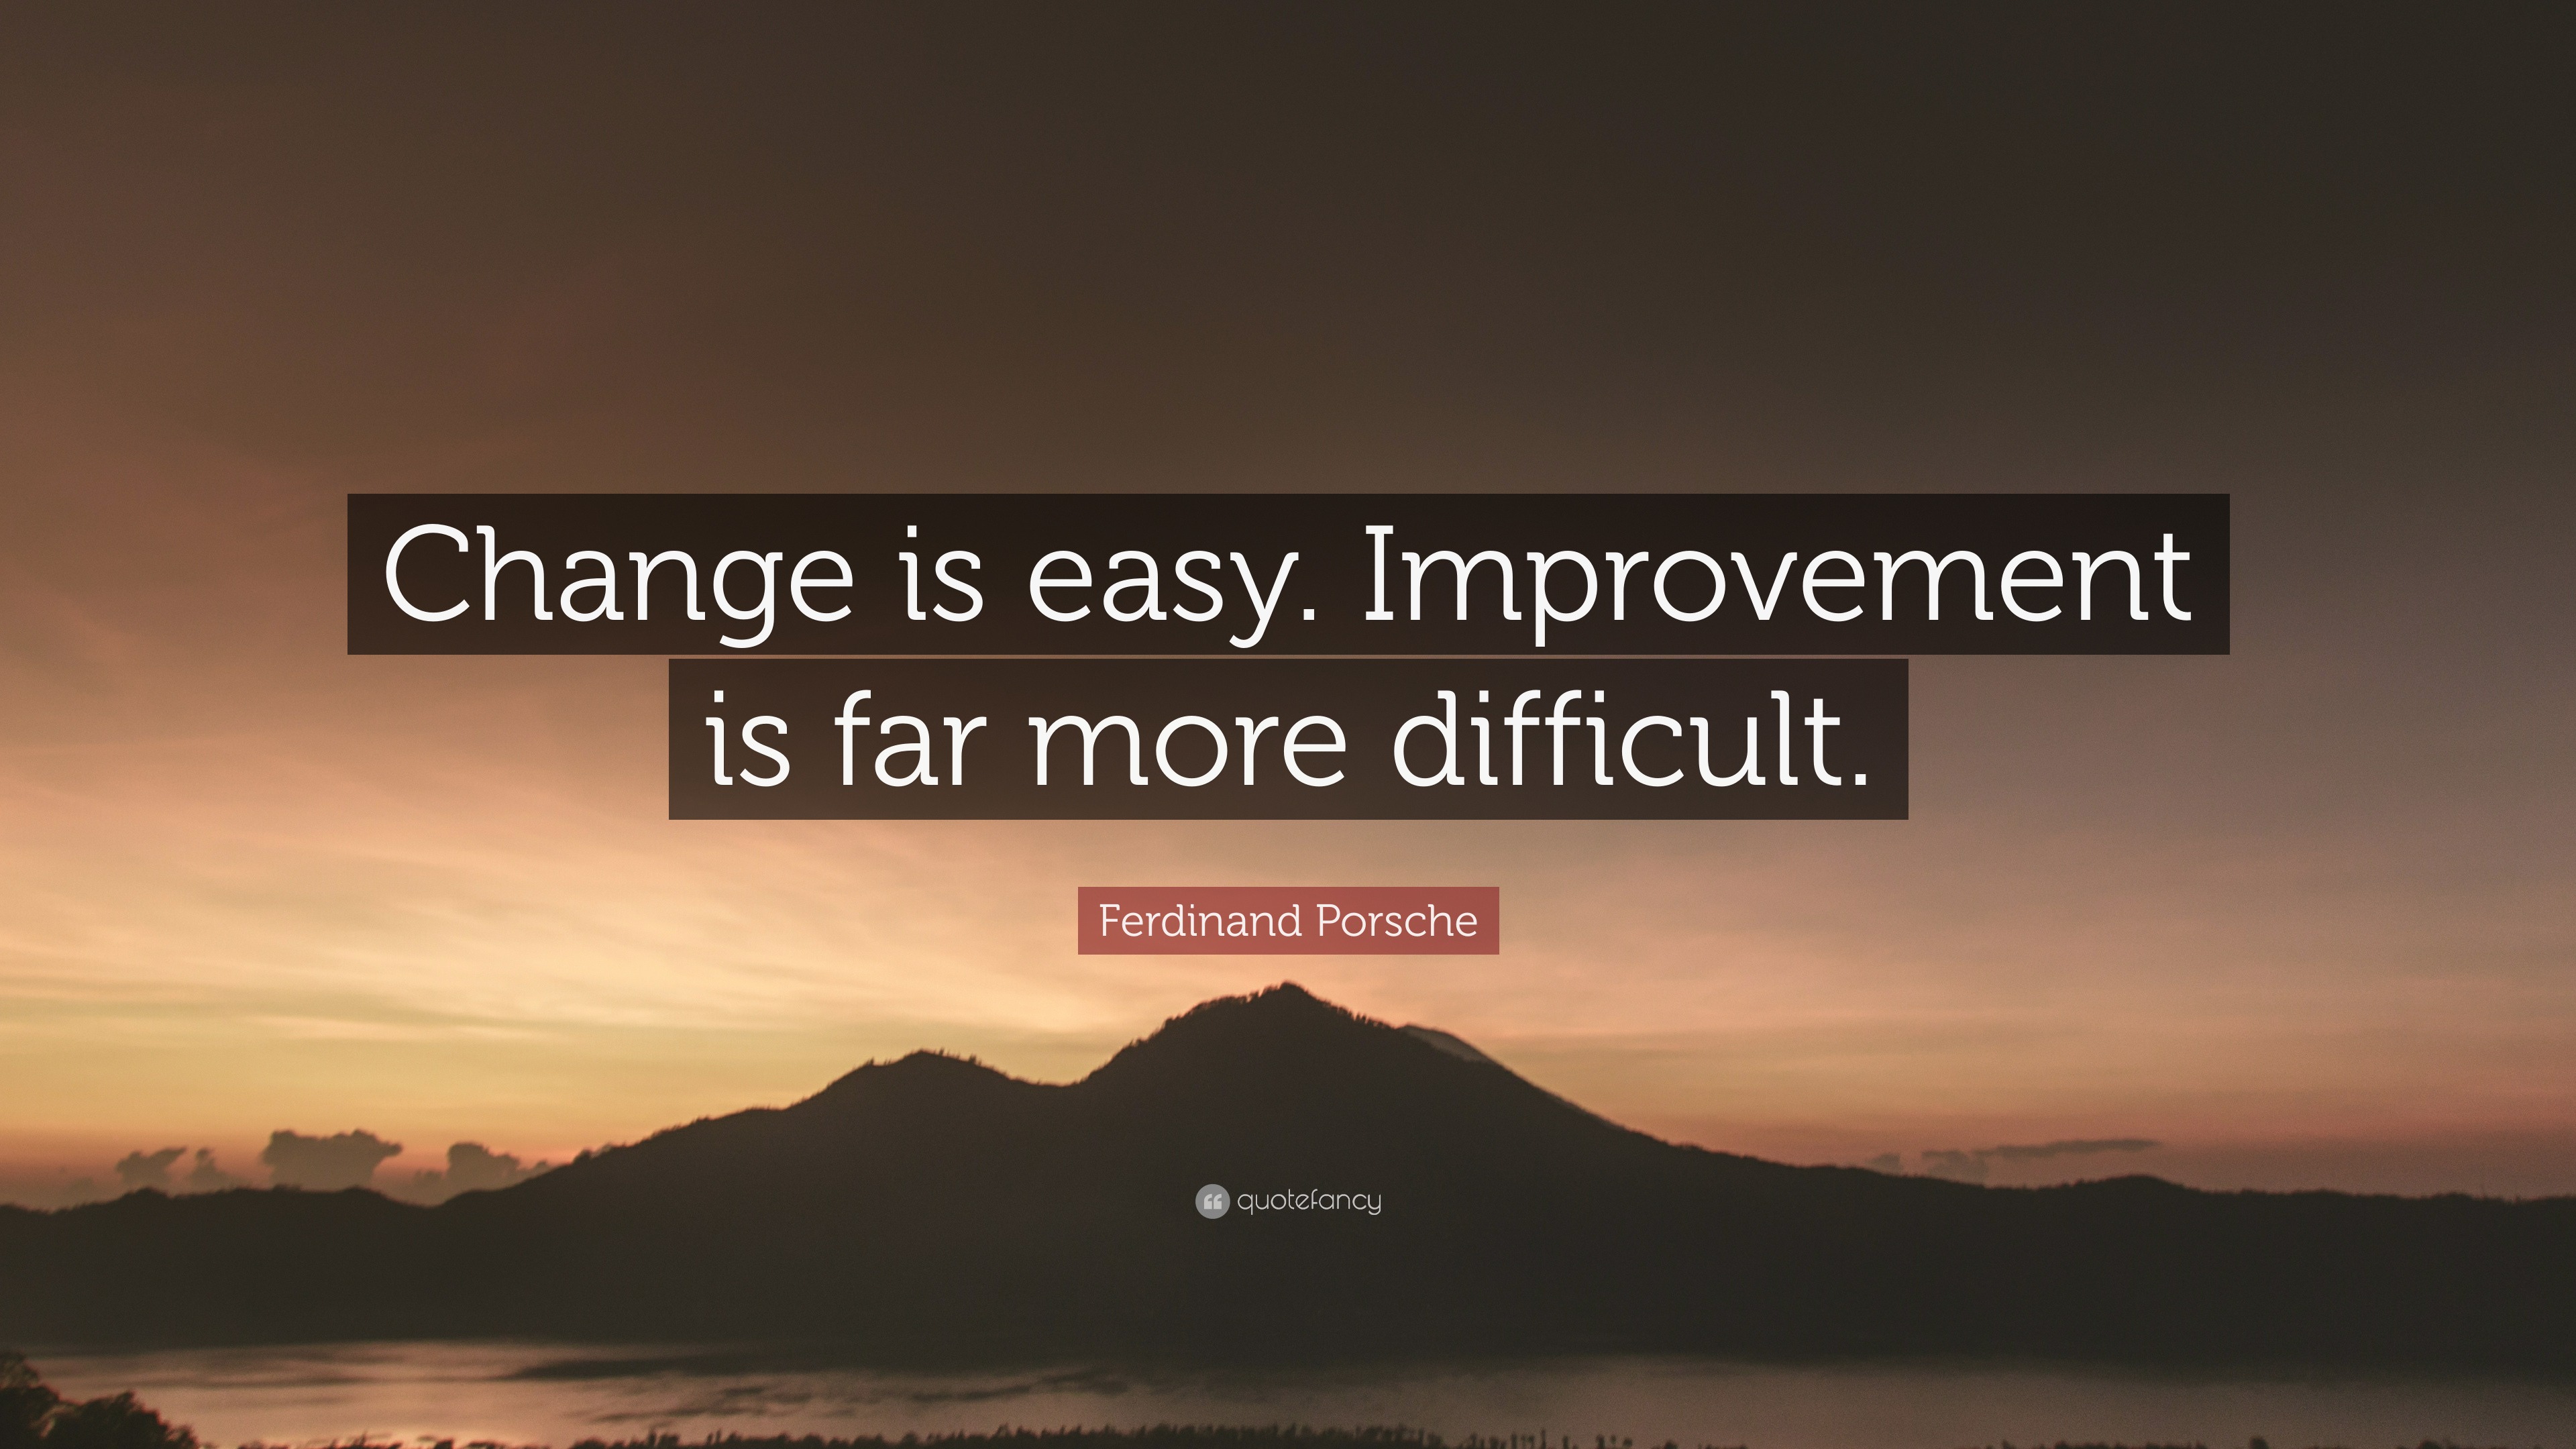 Ferdinand Porsche Quote: “Change is easy. Improvement is far more